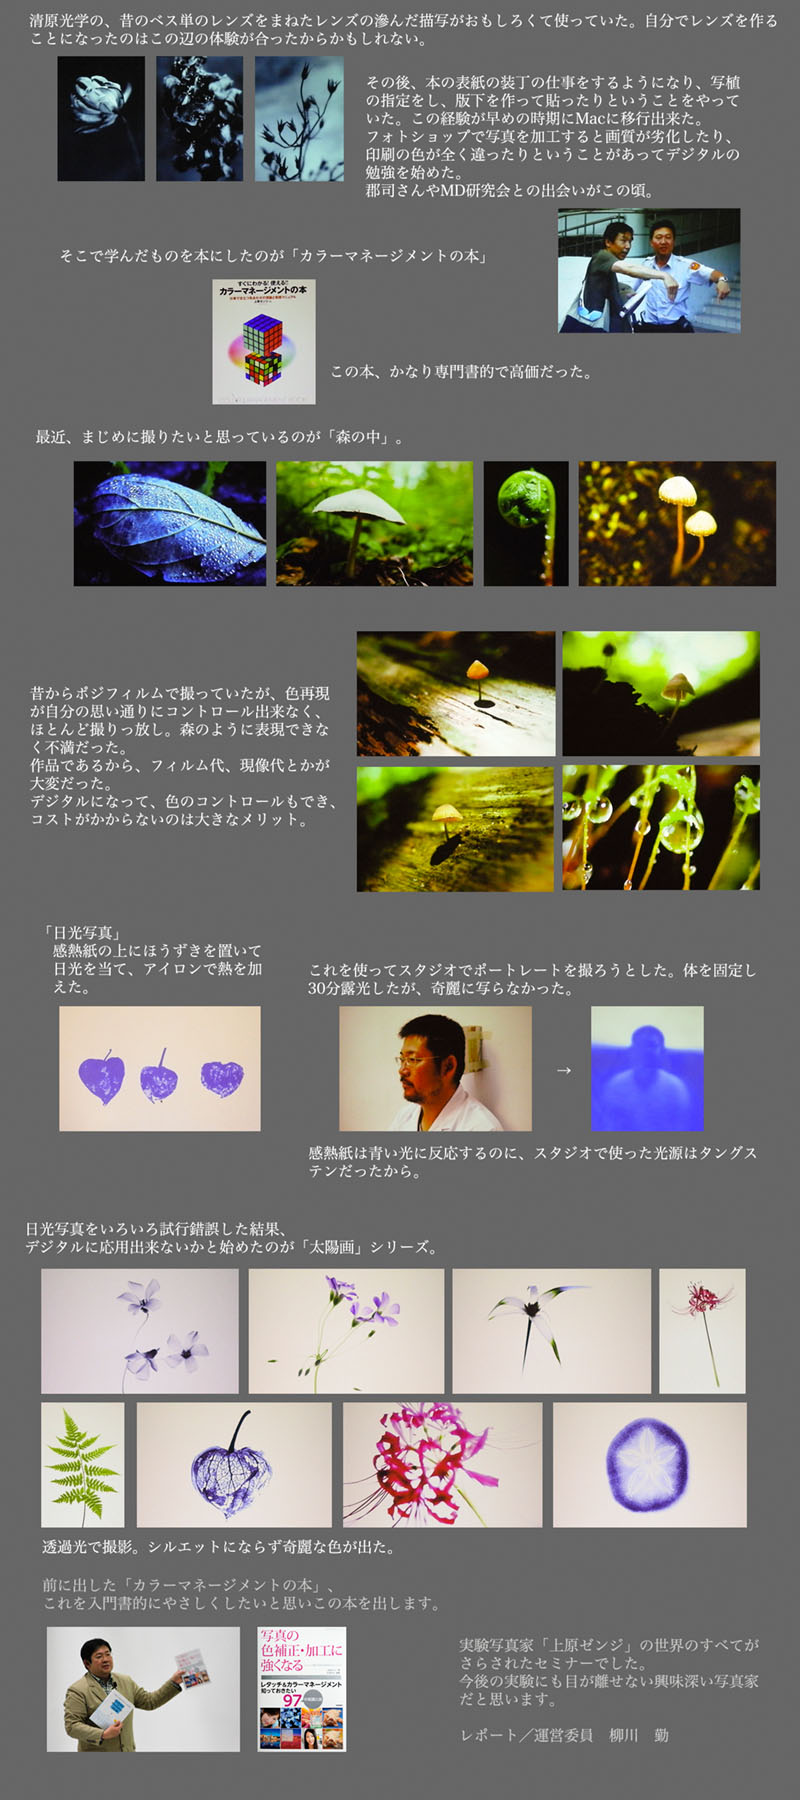 http://denjuku.gr.jp/seminar/_images/zen005.JPG